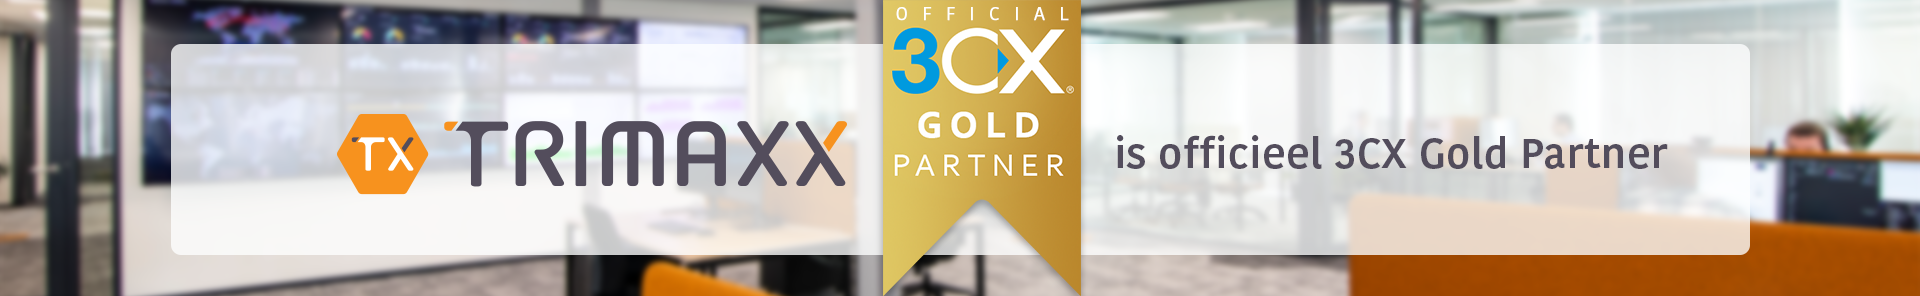 Trimaxx official 3CX Goldpartner Venlo